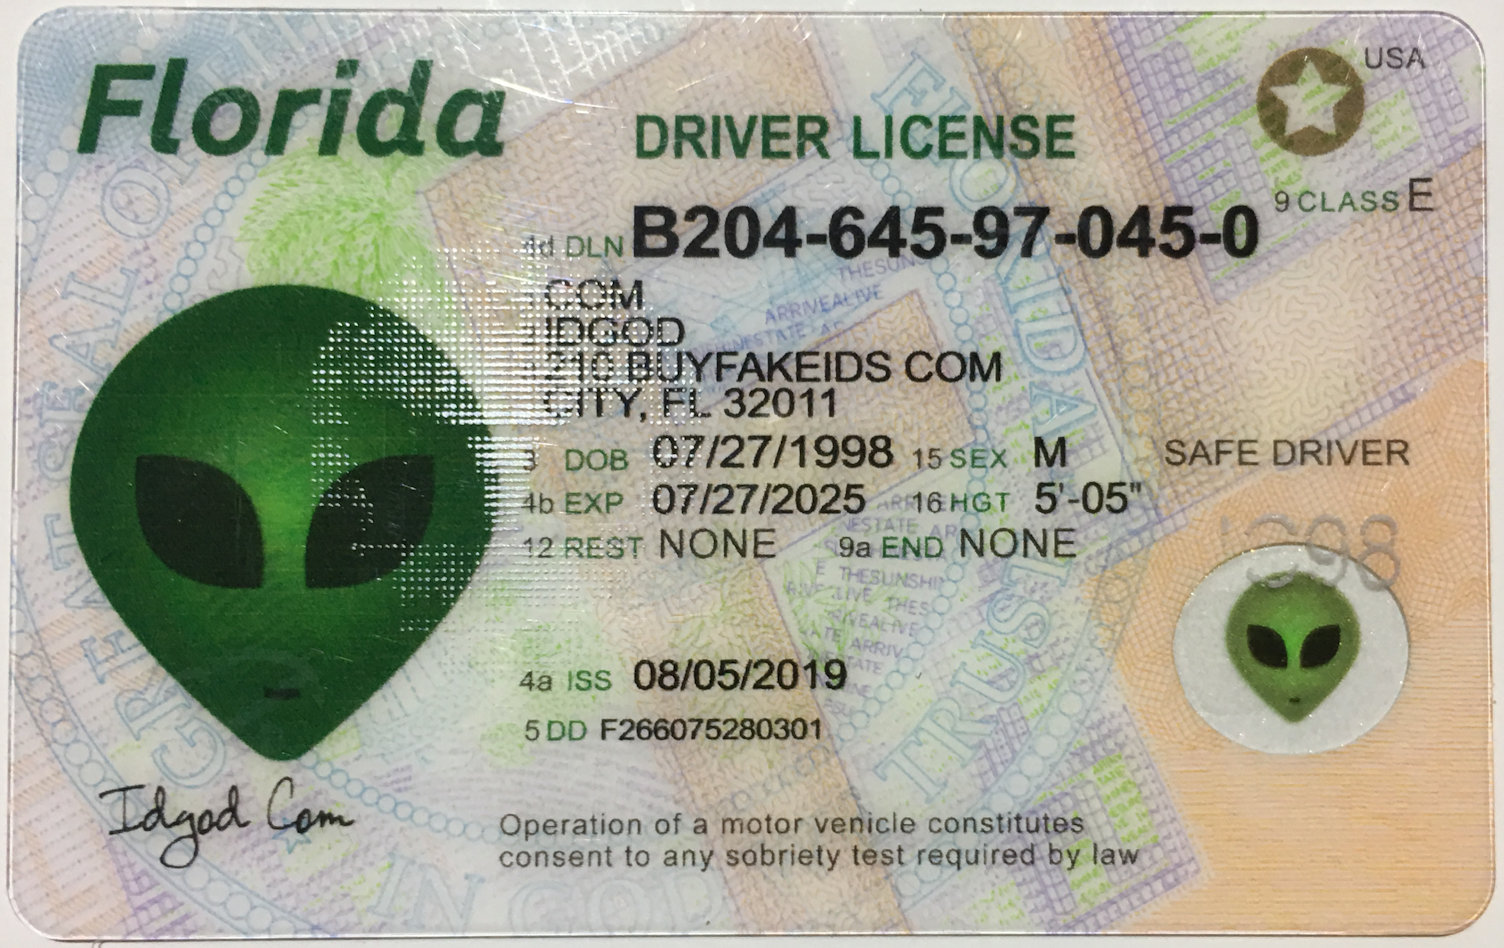 Florida fake id made by Idgod.